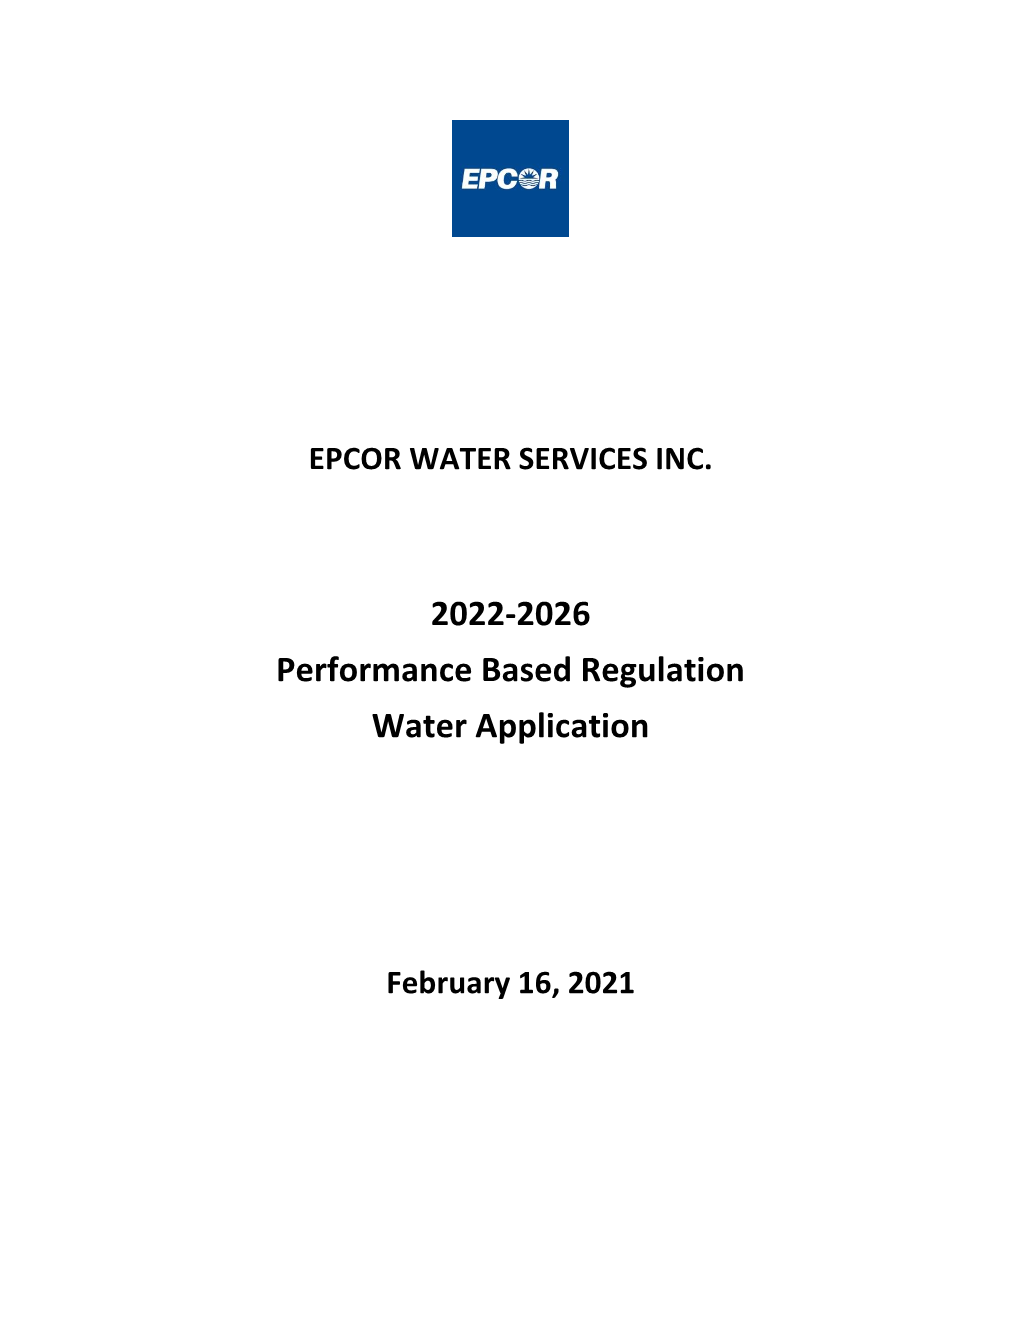 2022-2026 PBR Water Application